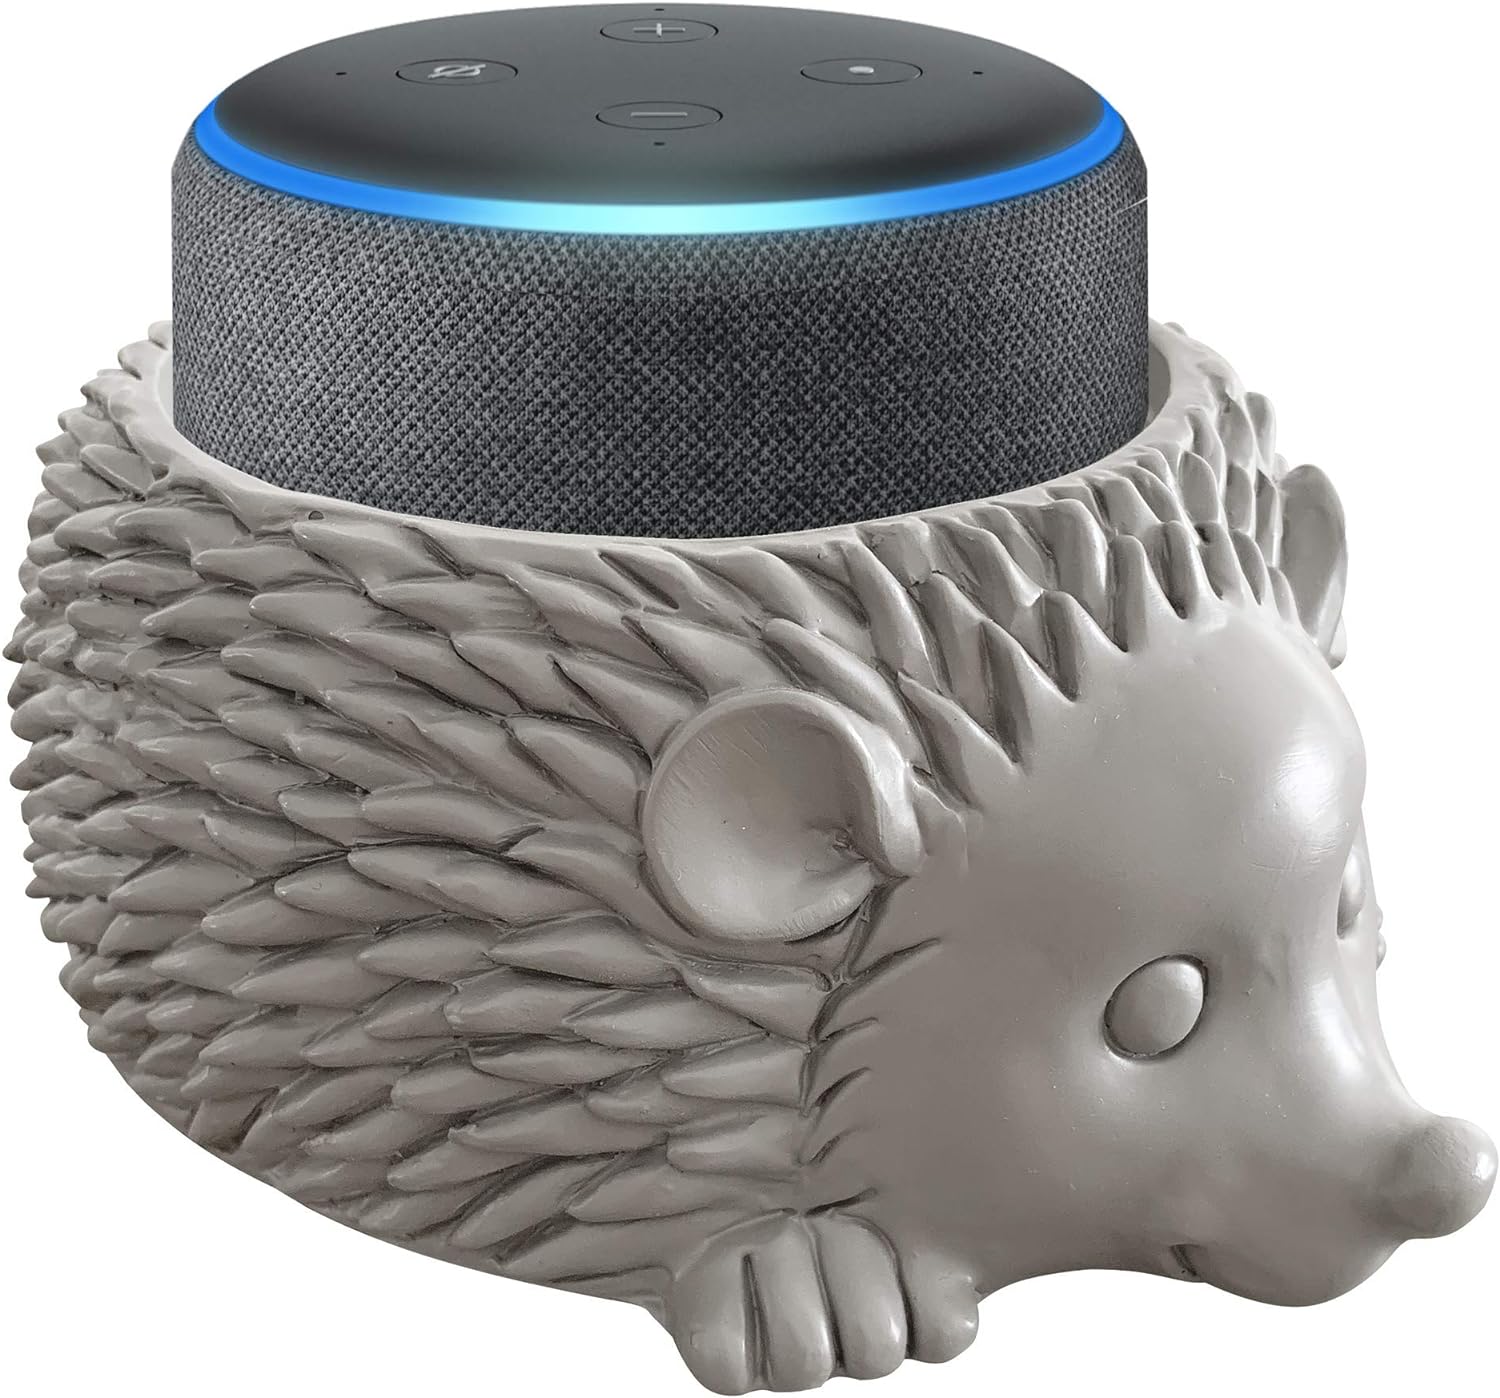 Dekodots Smart Speaker Table Stand (Hedgehog) – The Perfect Decorative Holder for Your Smart Speaker